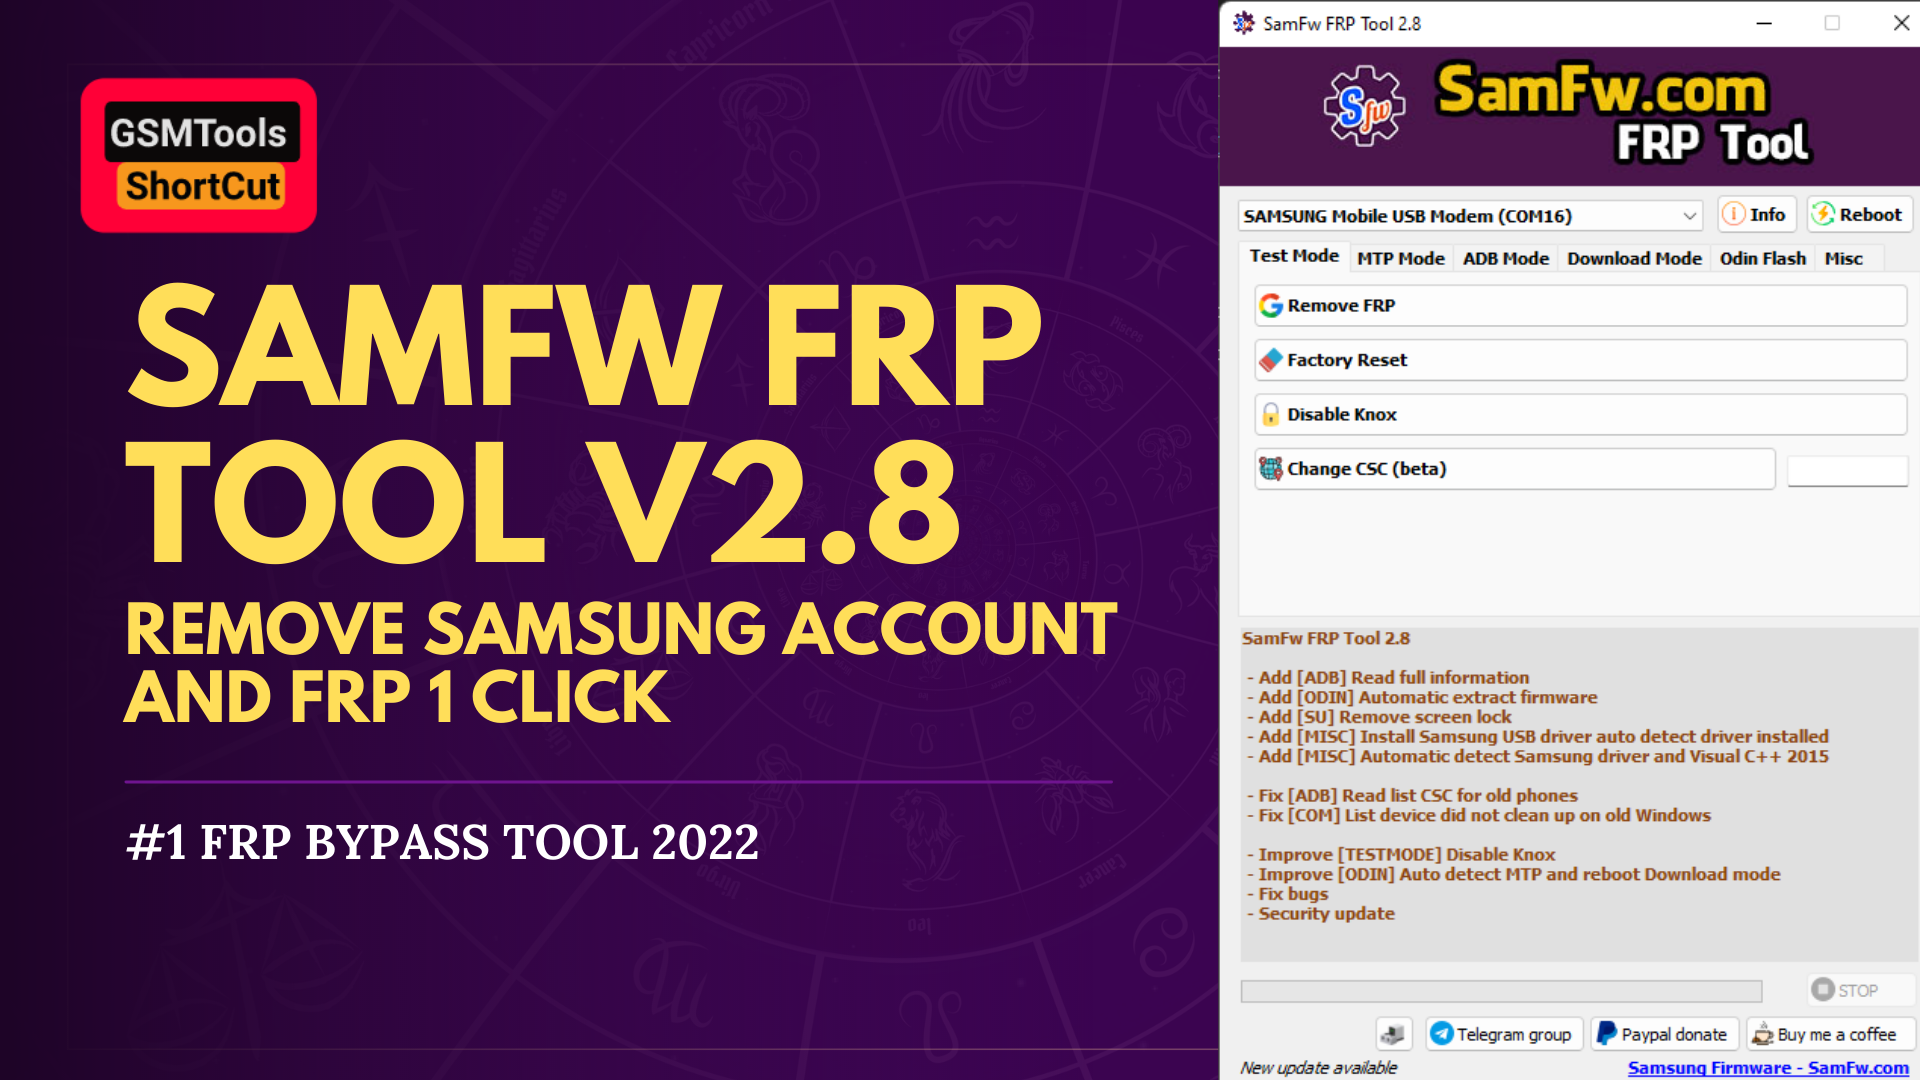 SamFw FRP Tool 2.8 - Remove Samsung FRP one click